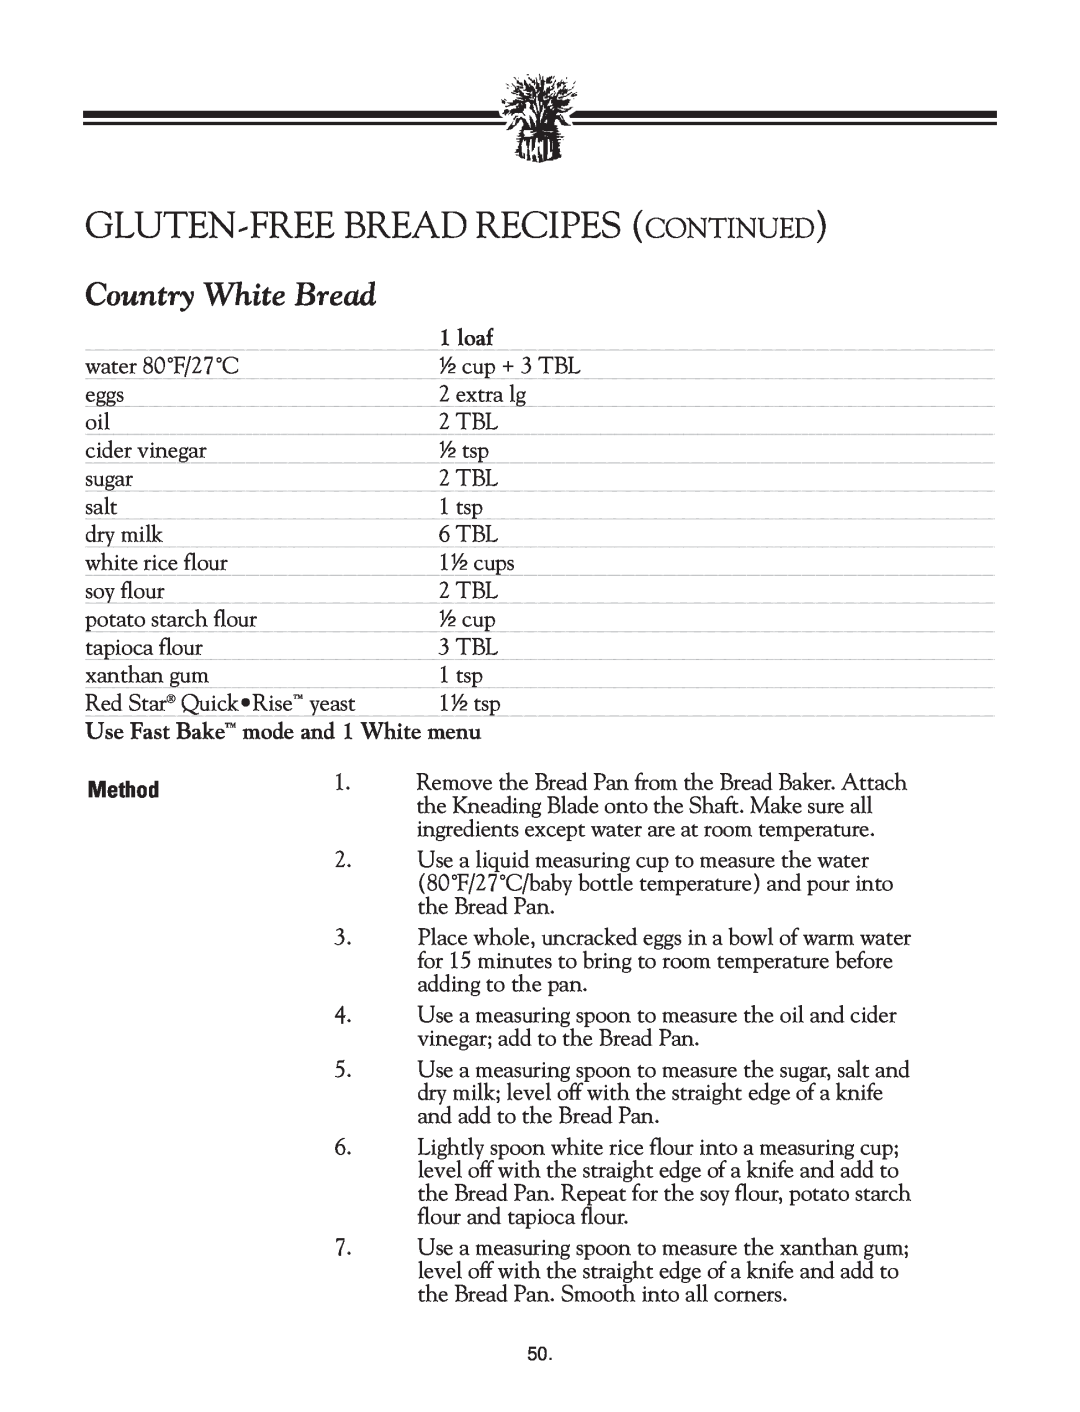 Breadman TR2828G instruction manual Gluten-Freebread Recipes Continued, Country White Bread, Method 